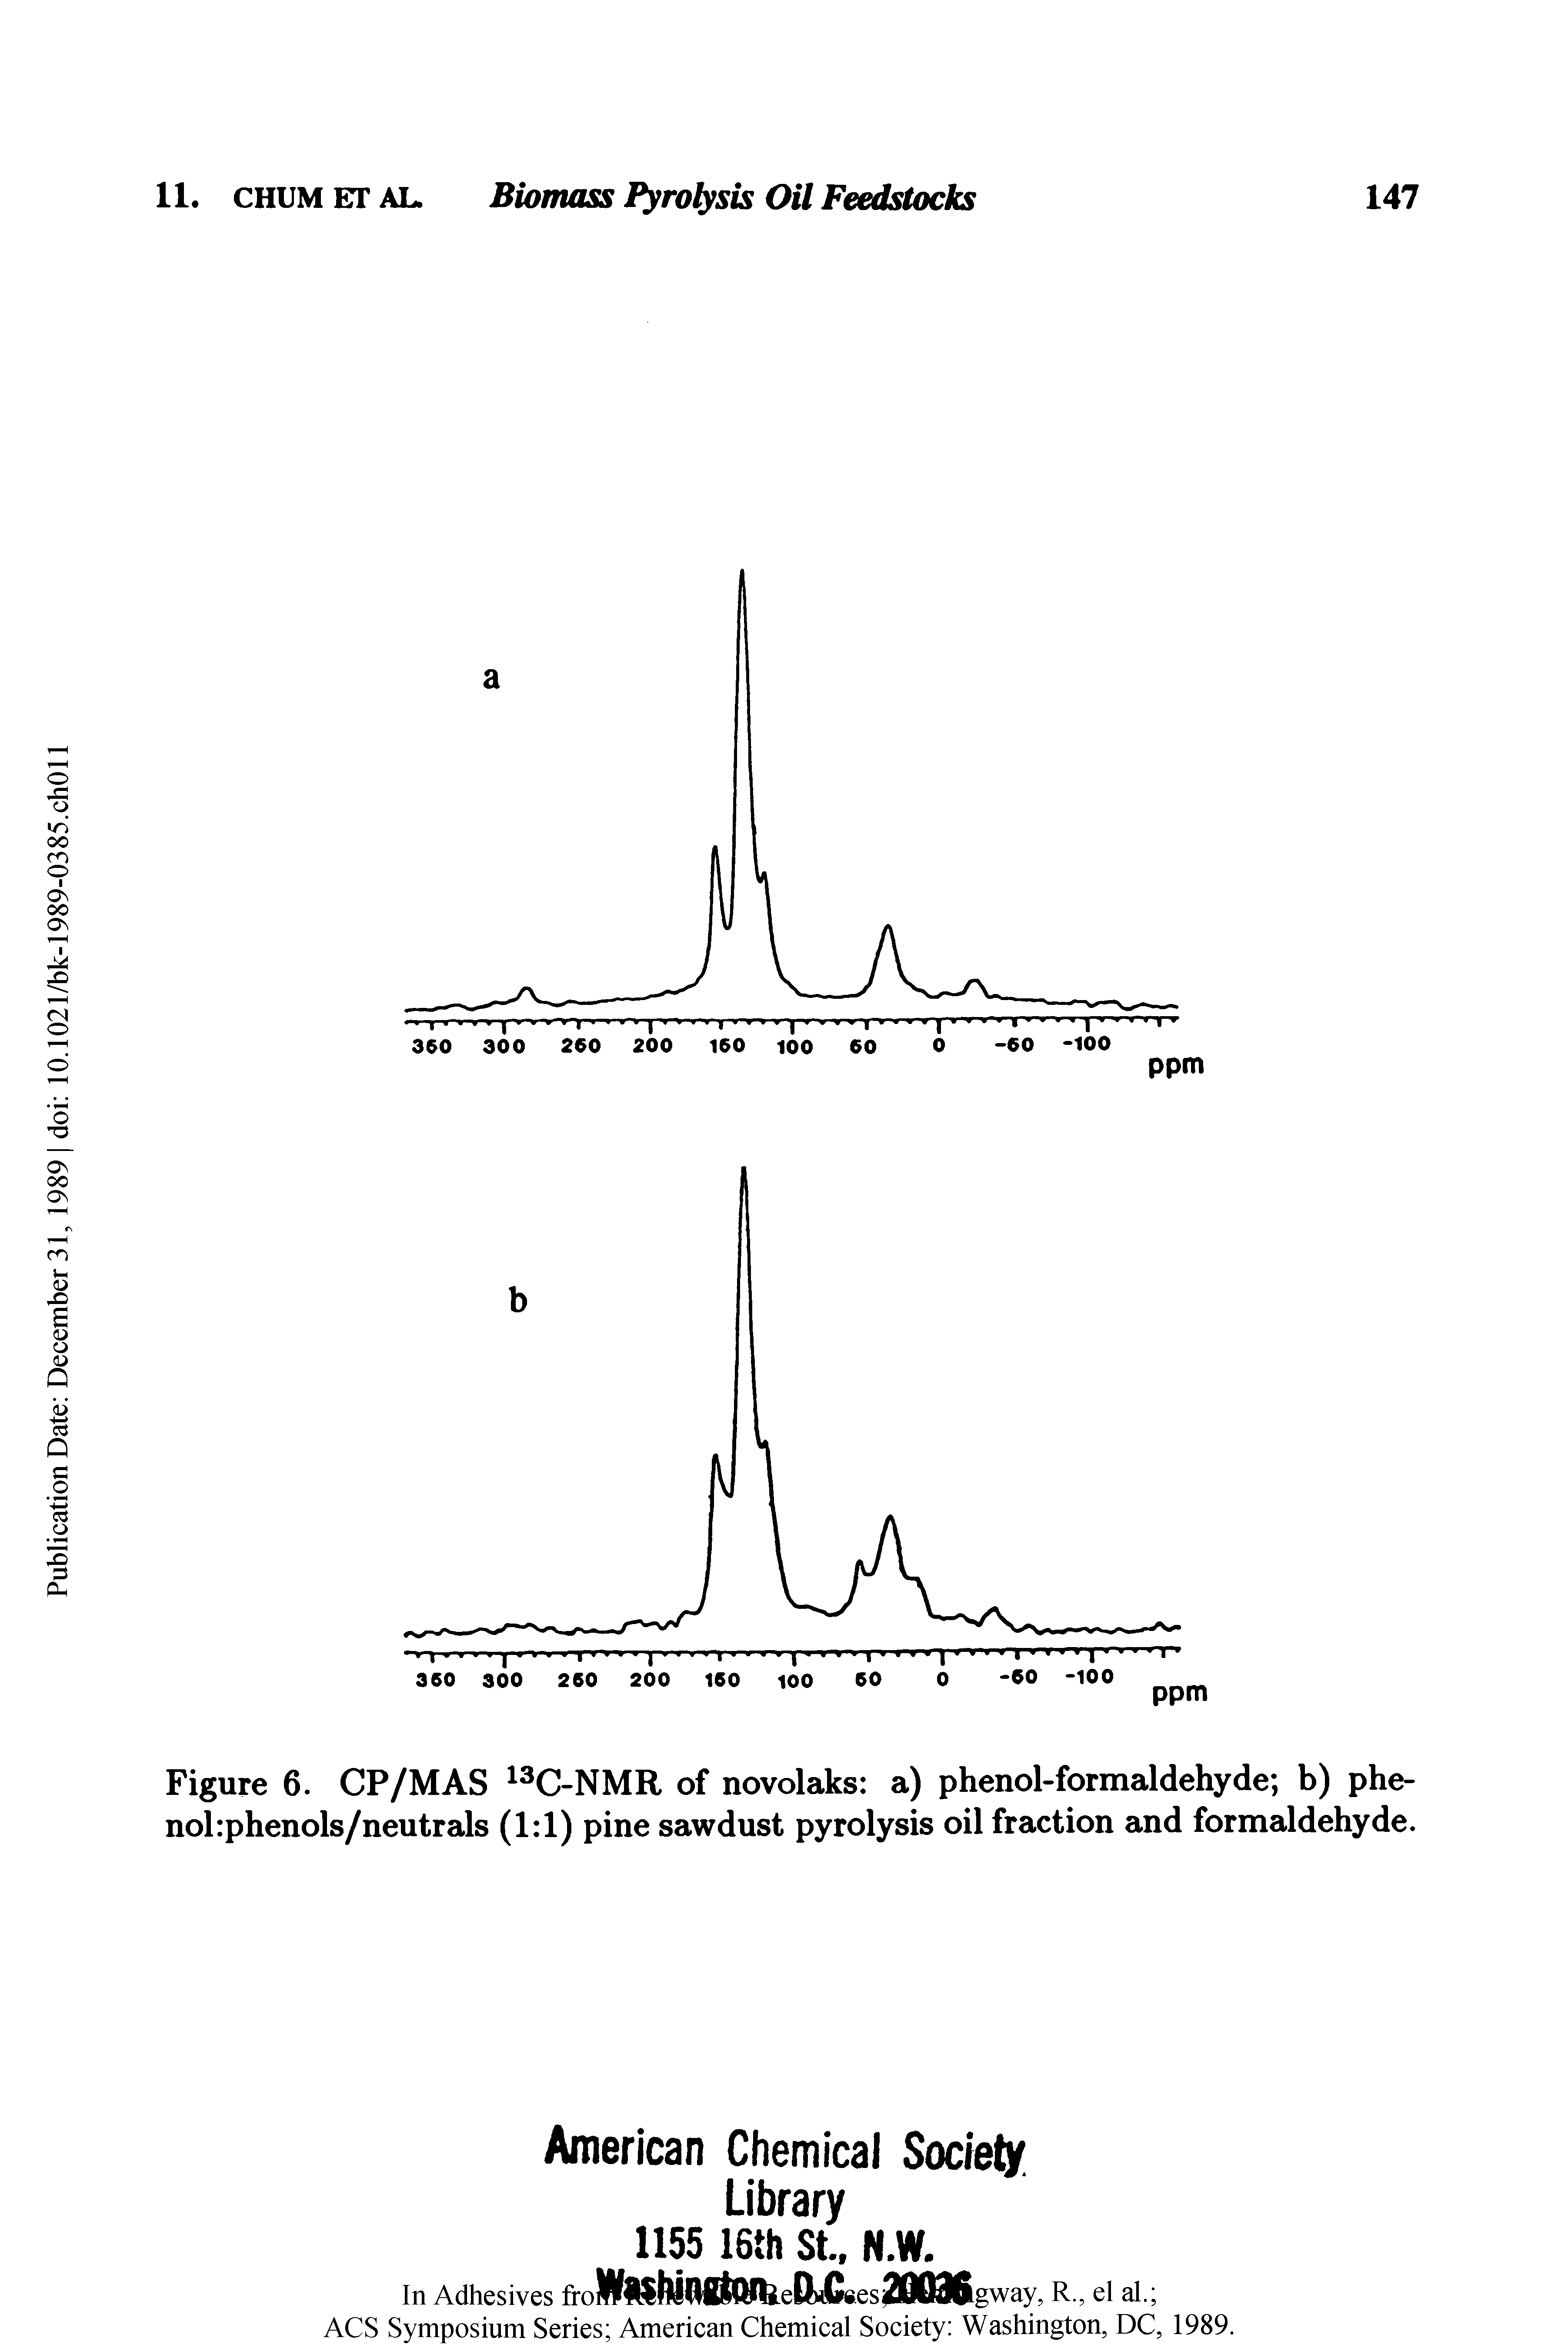 Figure 6. CP/MAS 13C-NMR of novolaks a) phenol-formaldehyde b) phe-nol phenols/neutrals (1 1) pine sawdust pyrolysis oil fraction and formaldehyde.